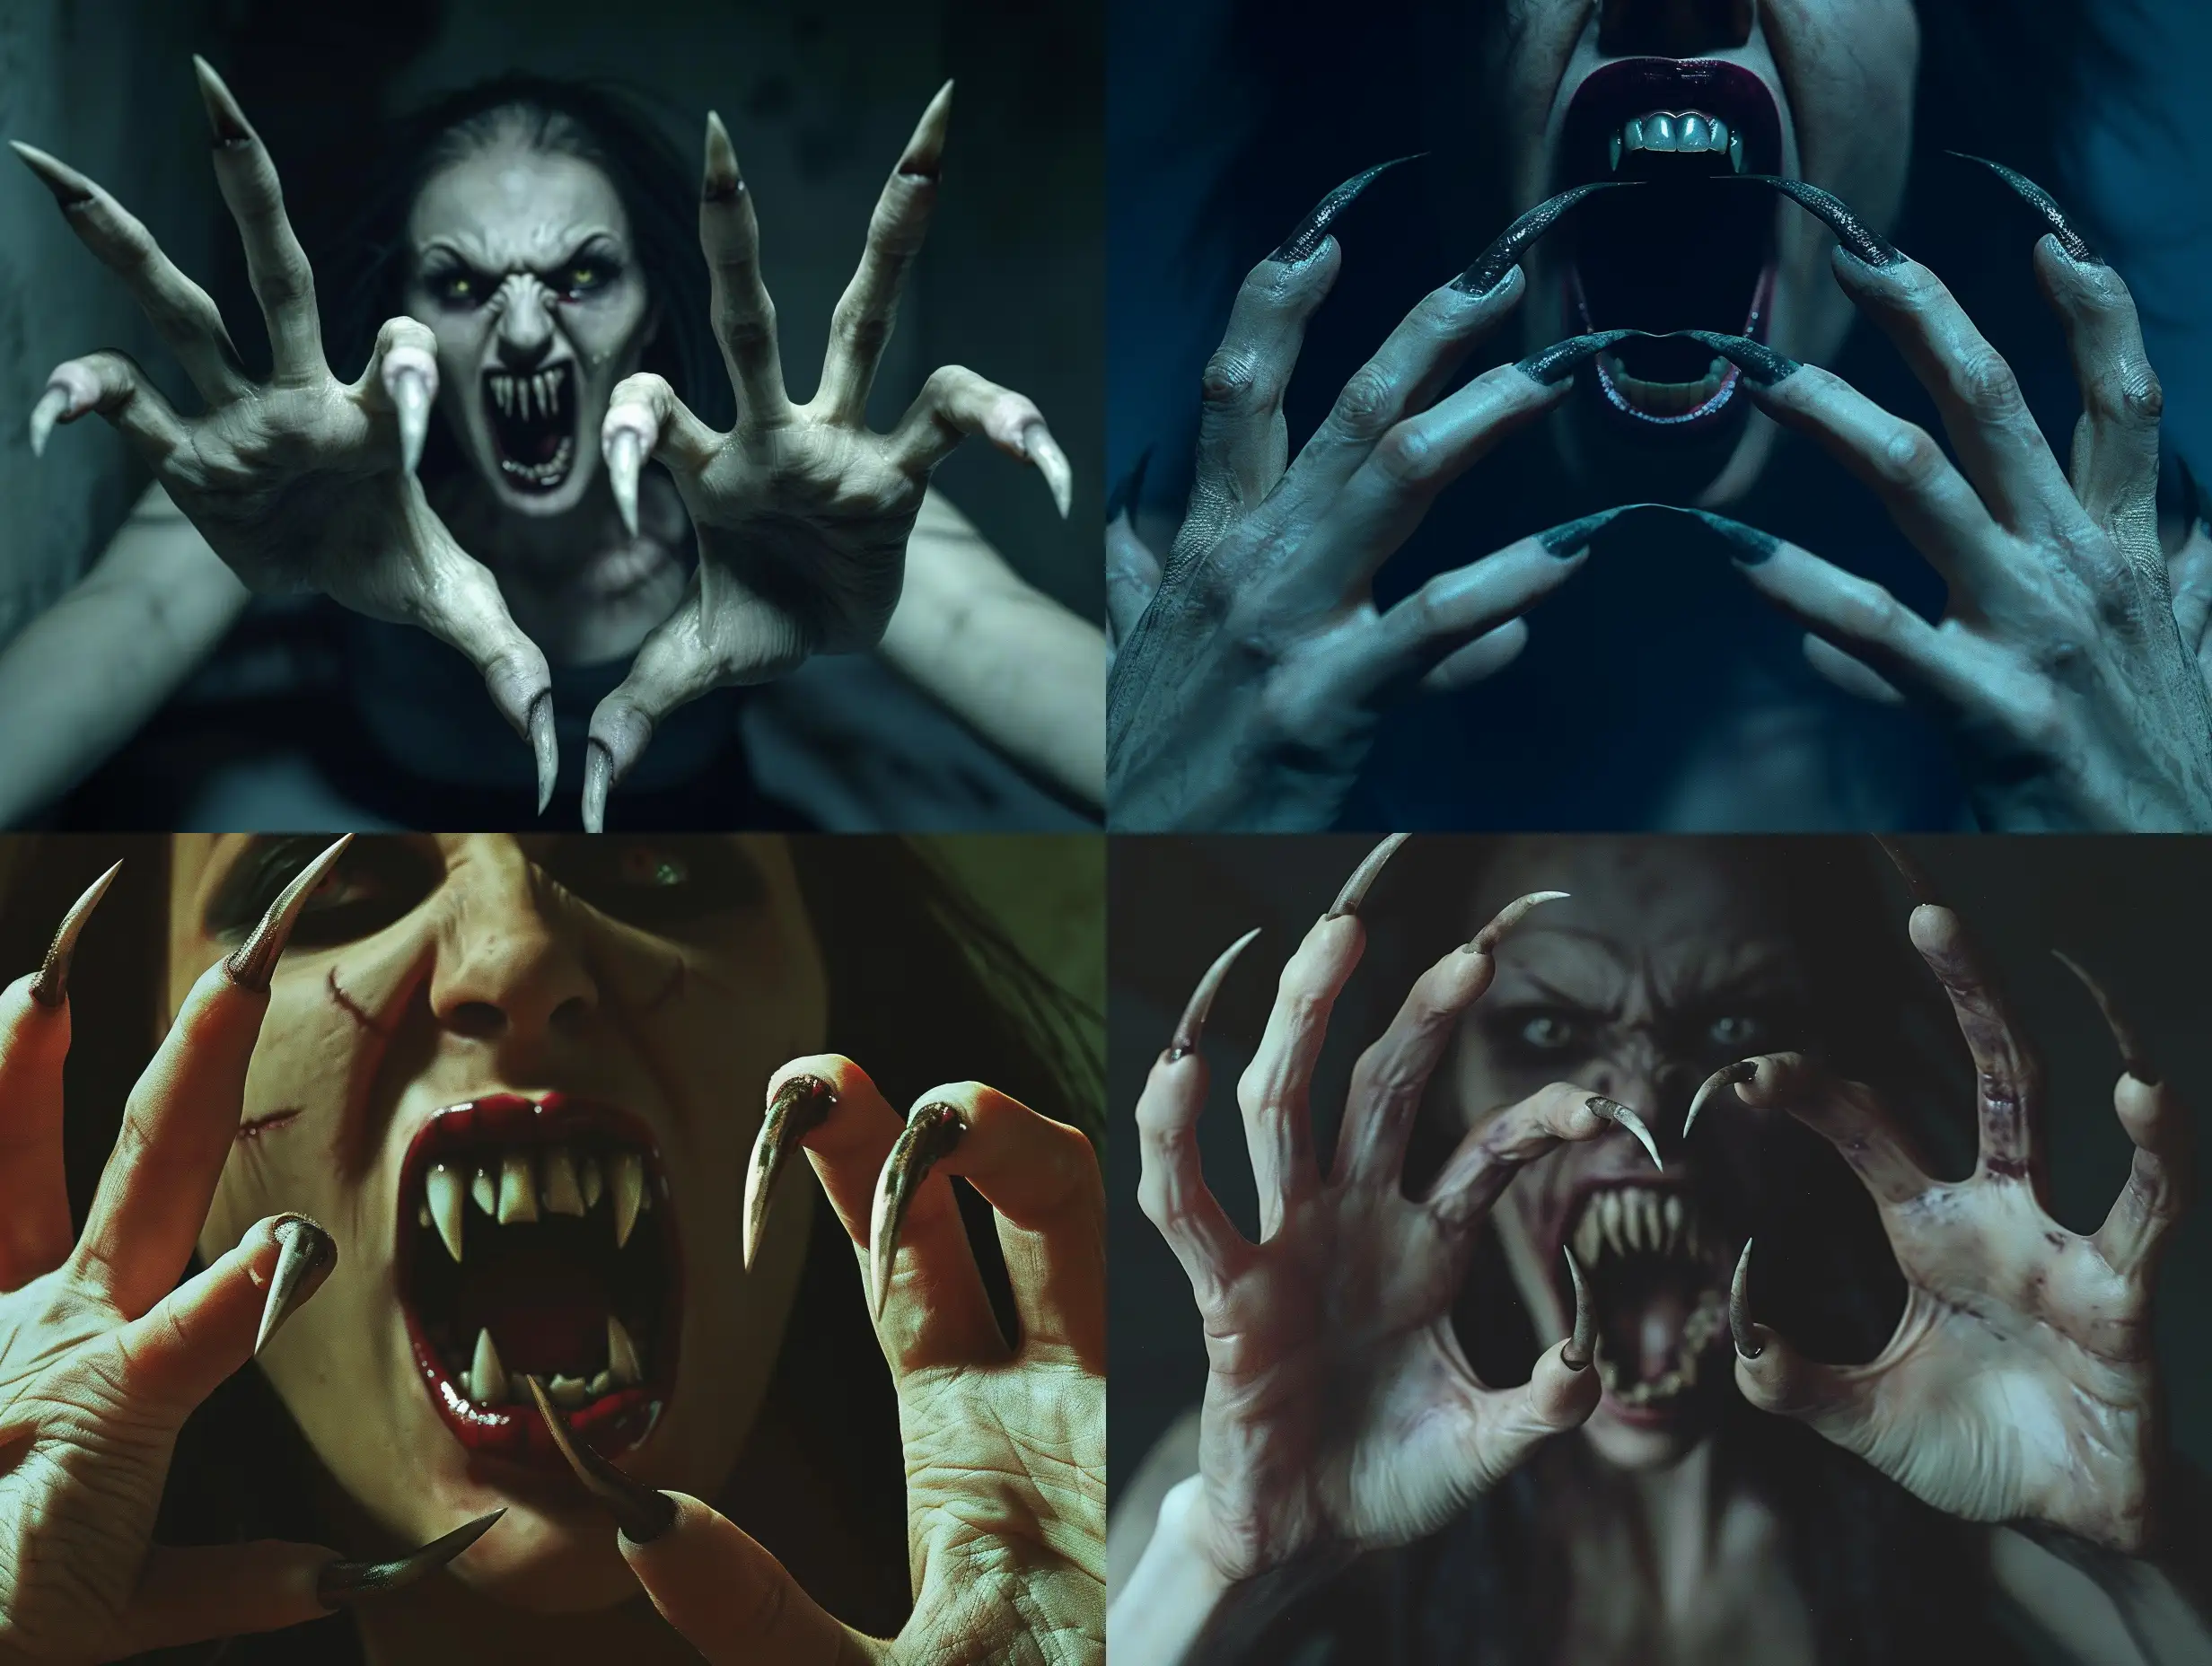 Terrifying-Vampire-Woman-with-Long-Fingernails-in-Dark-Room